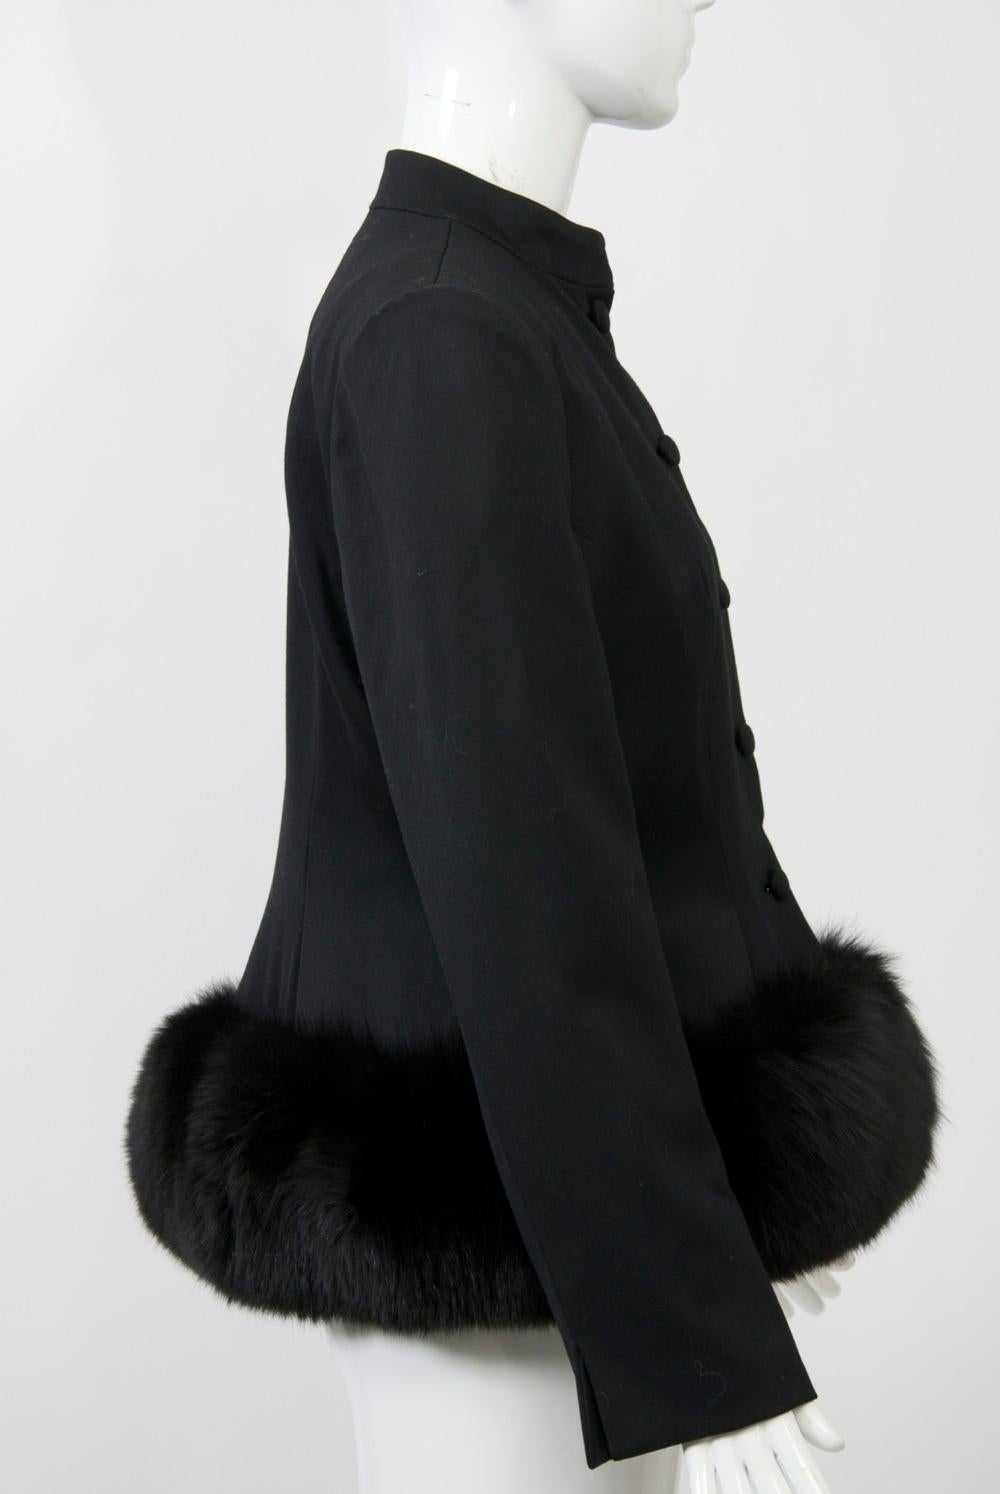 Noir Pauline Trigère - Veste bordée de renard en vente